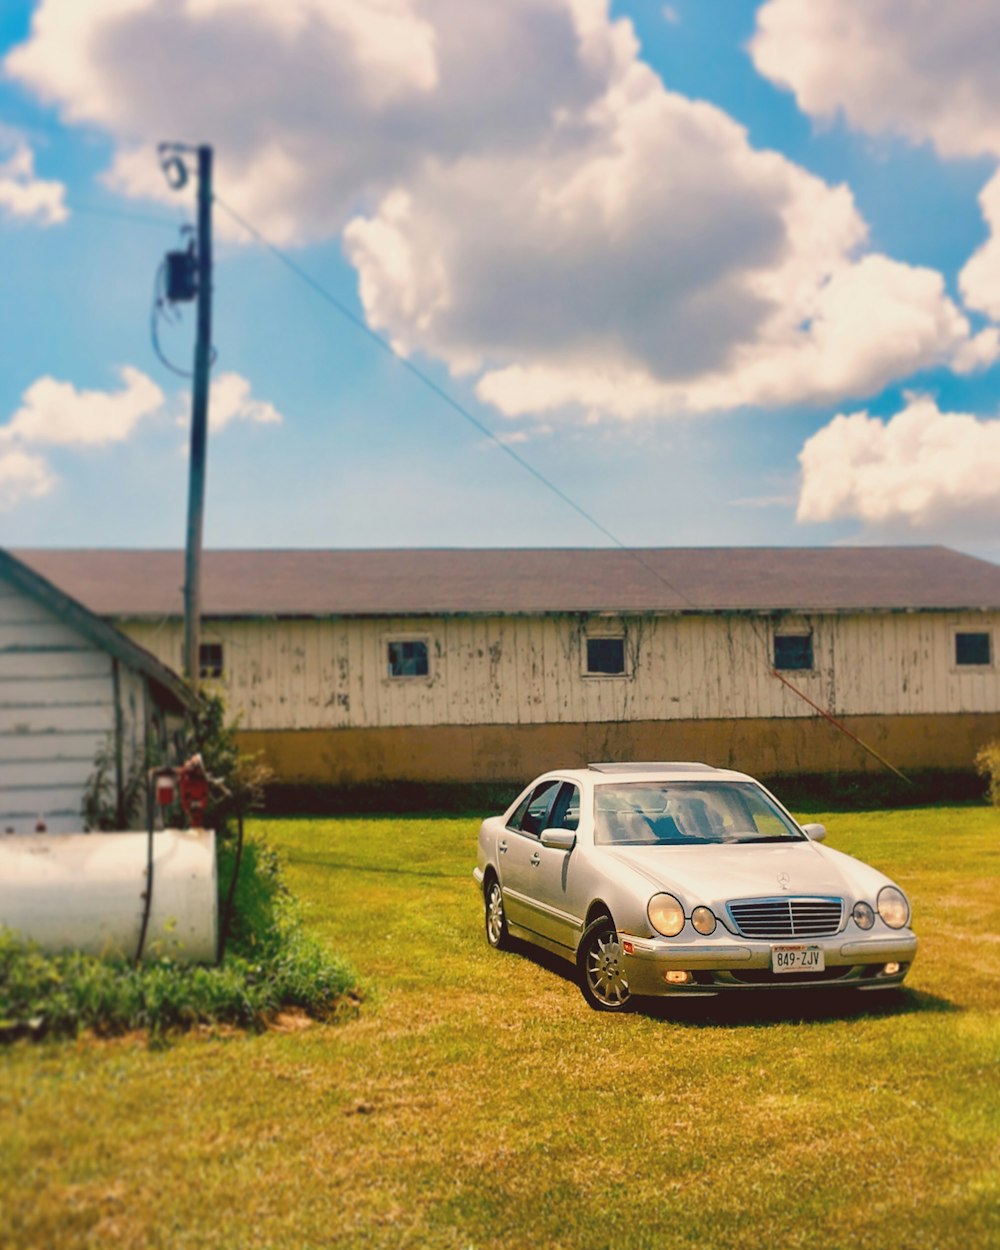 clássico cinza Mercedes Benz sedan estacionado em campo de grama ao lado de casa